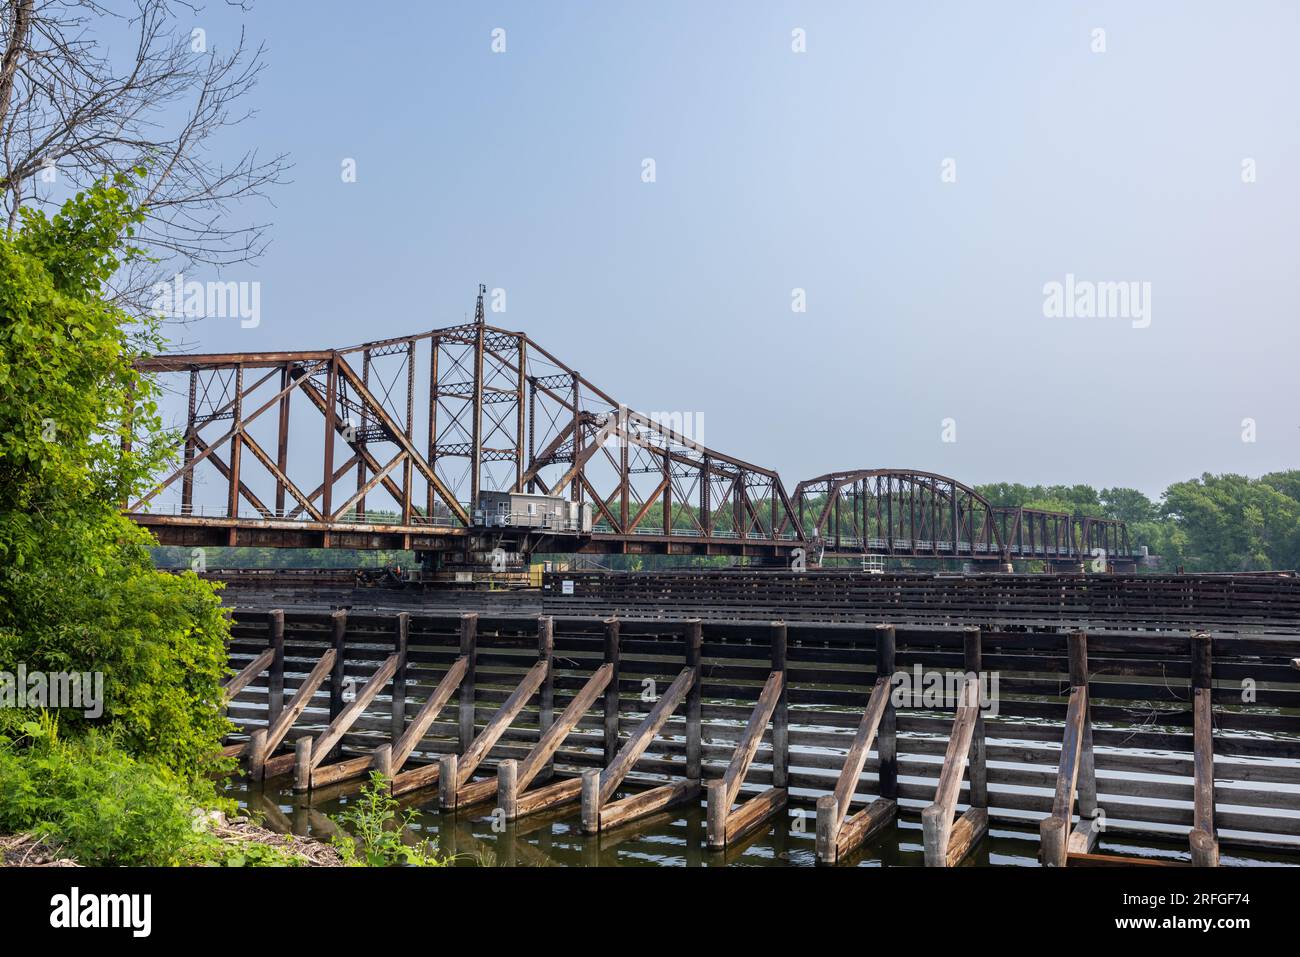 Railroad Swing Bridge On The Mississippi River Stock Photo